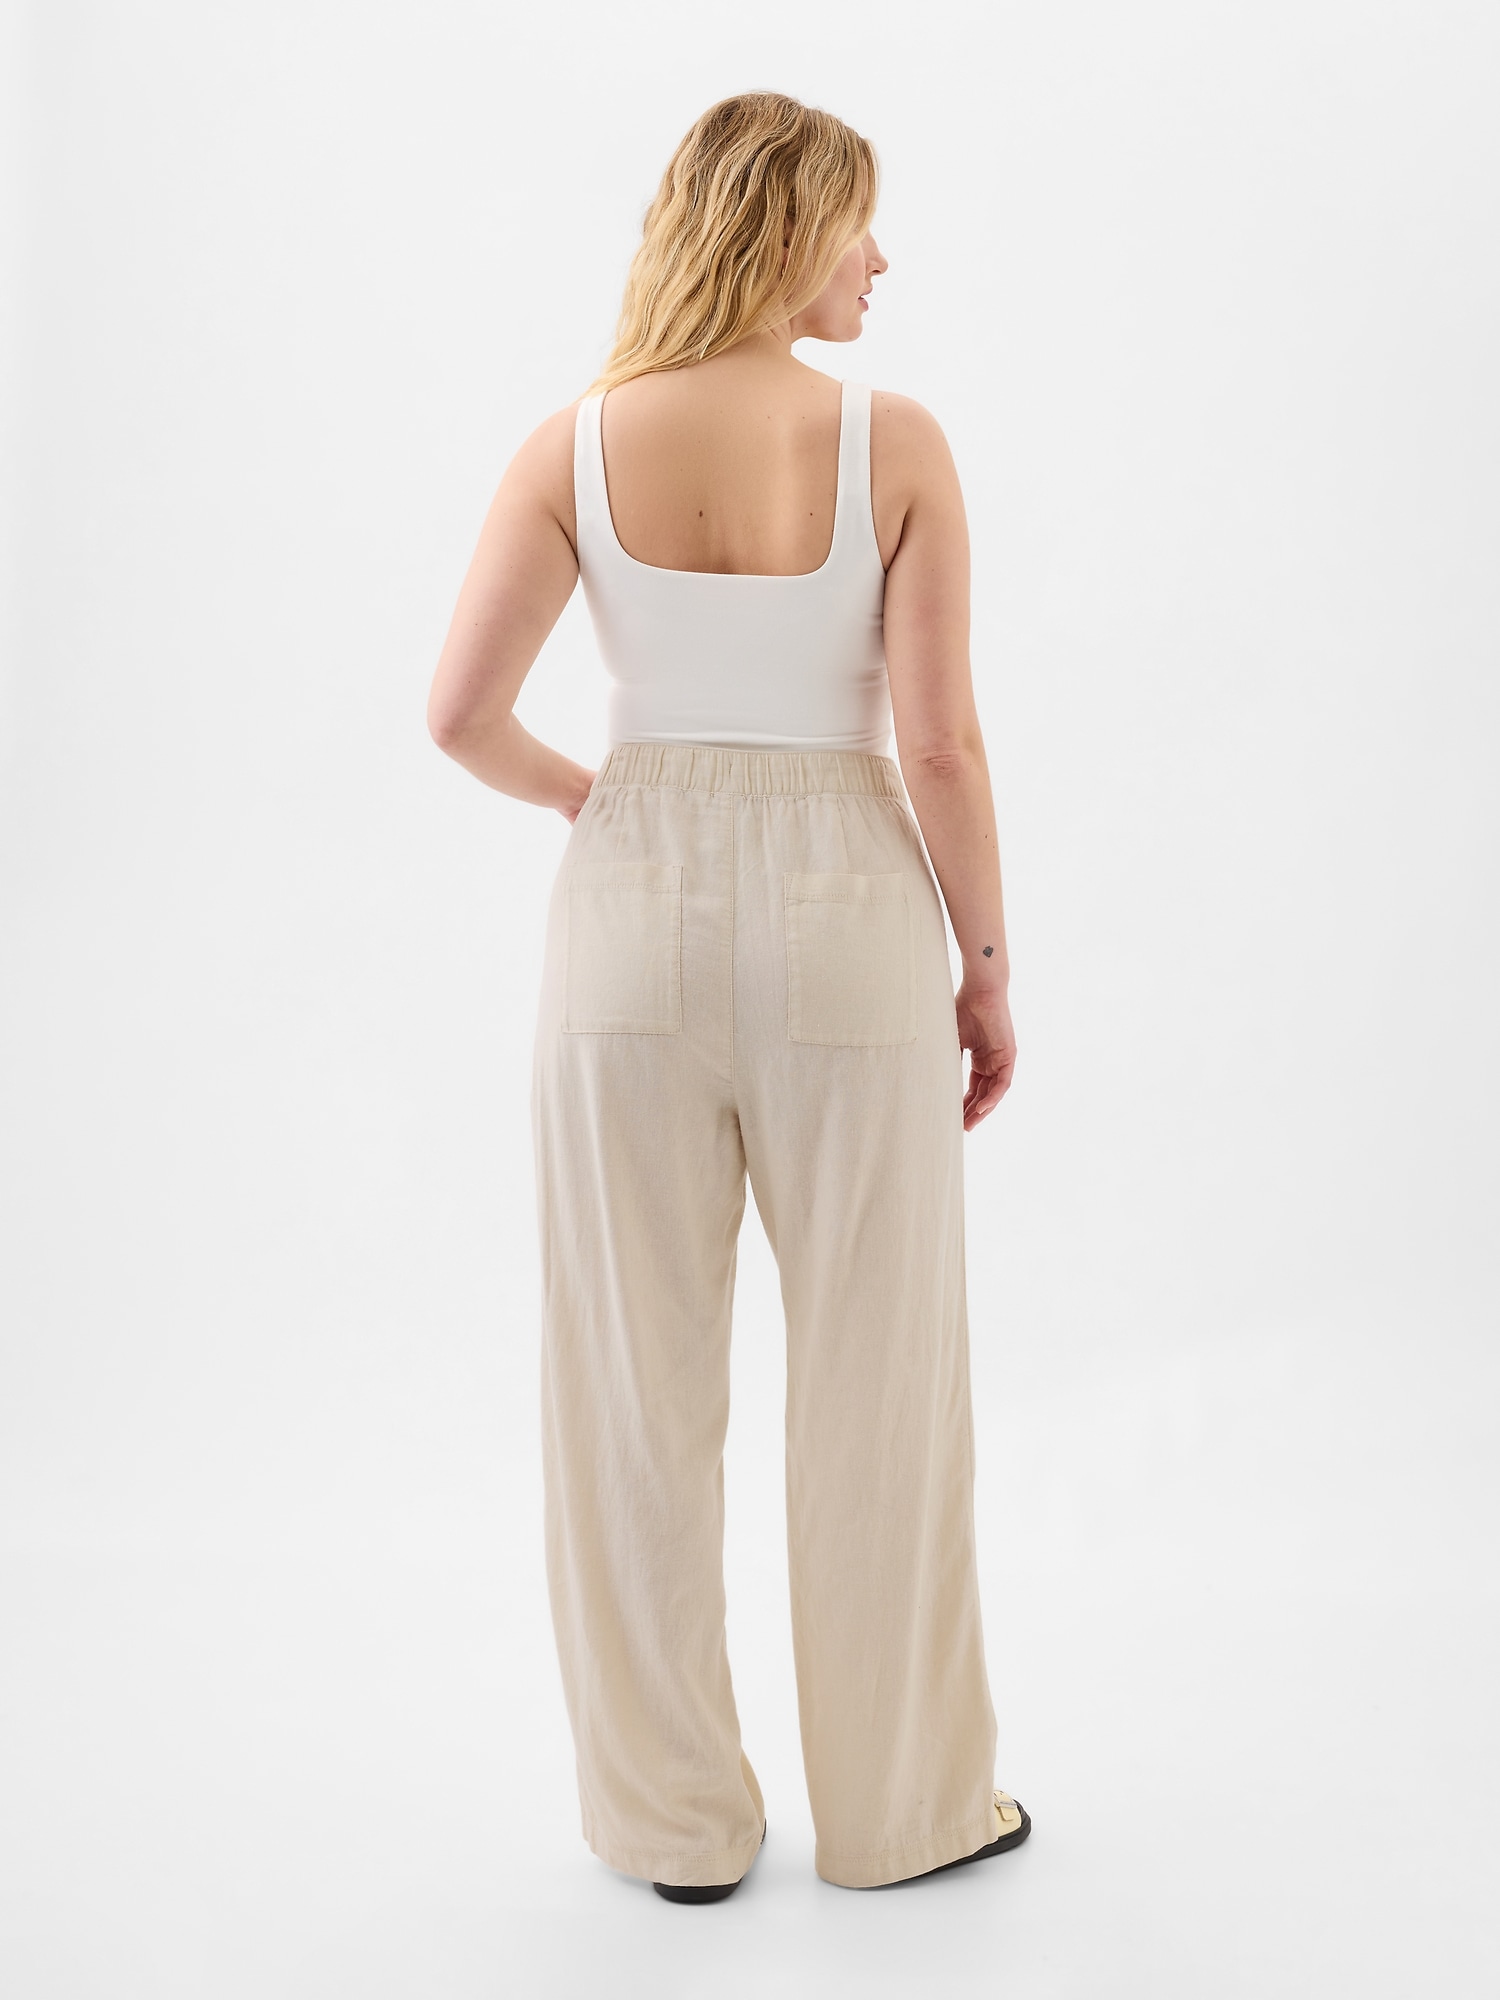 Linen-Blend Wide-Leg Pull-On Pants | Gap Factory